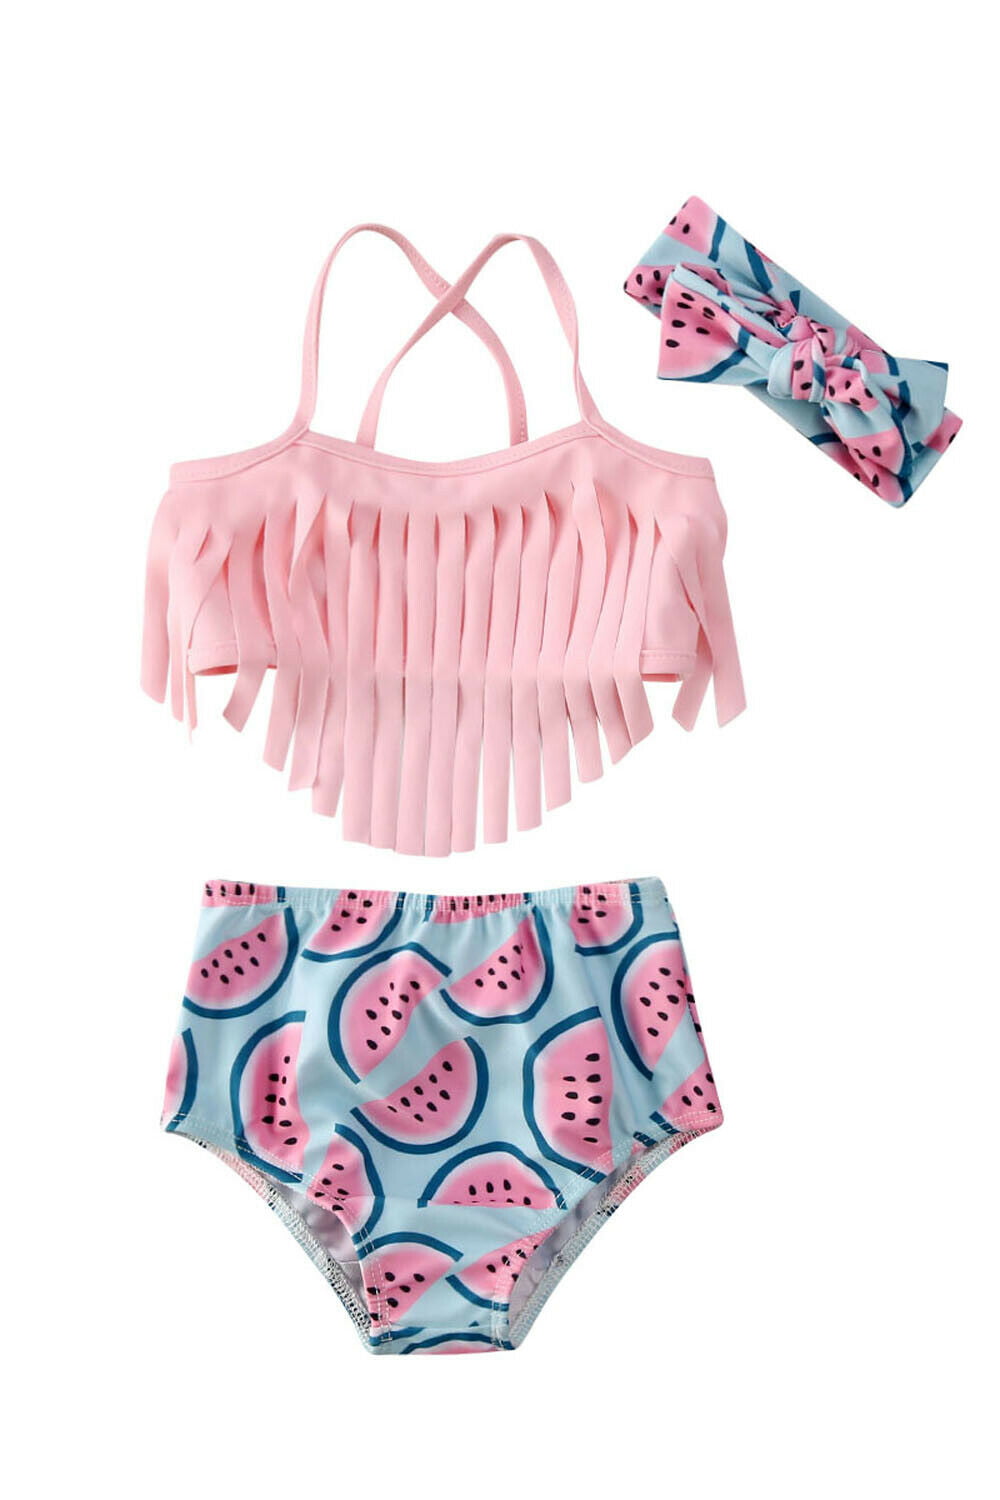 Newborn Toddler Kid Baby Girl Swimwear Swimsuit Bathing Bikini Beachwear Outfit 